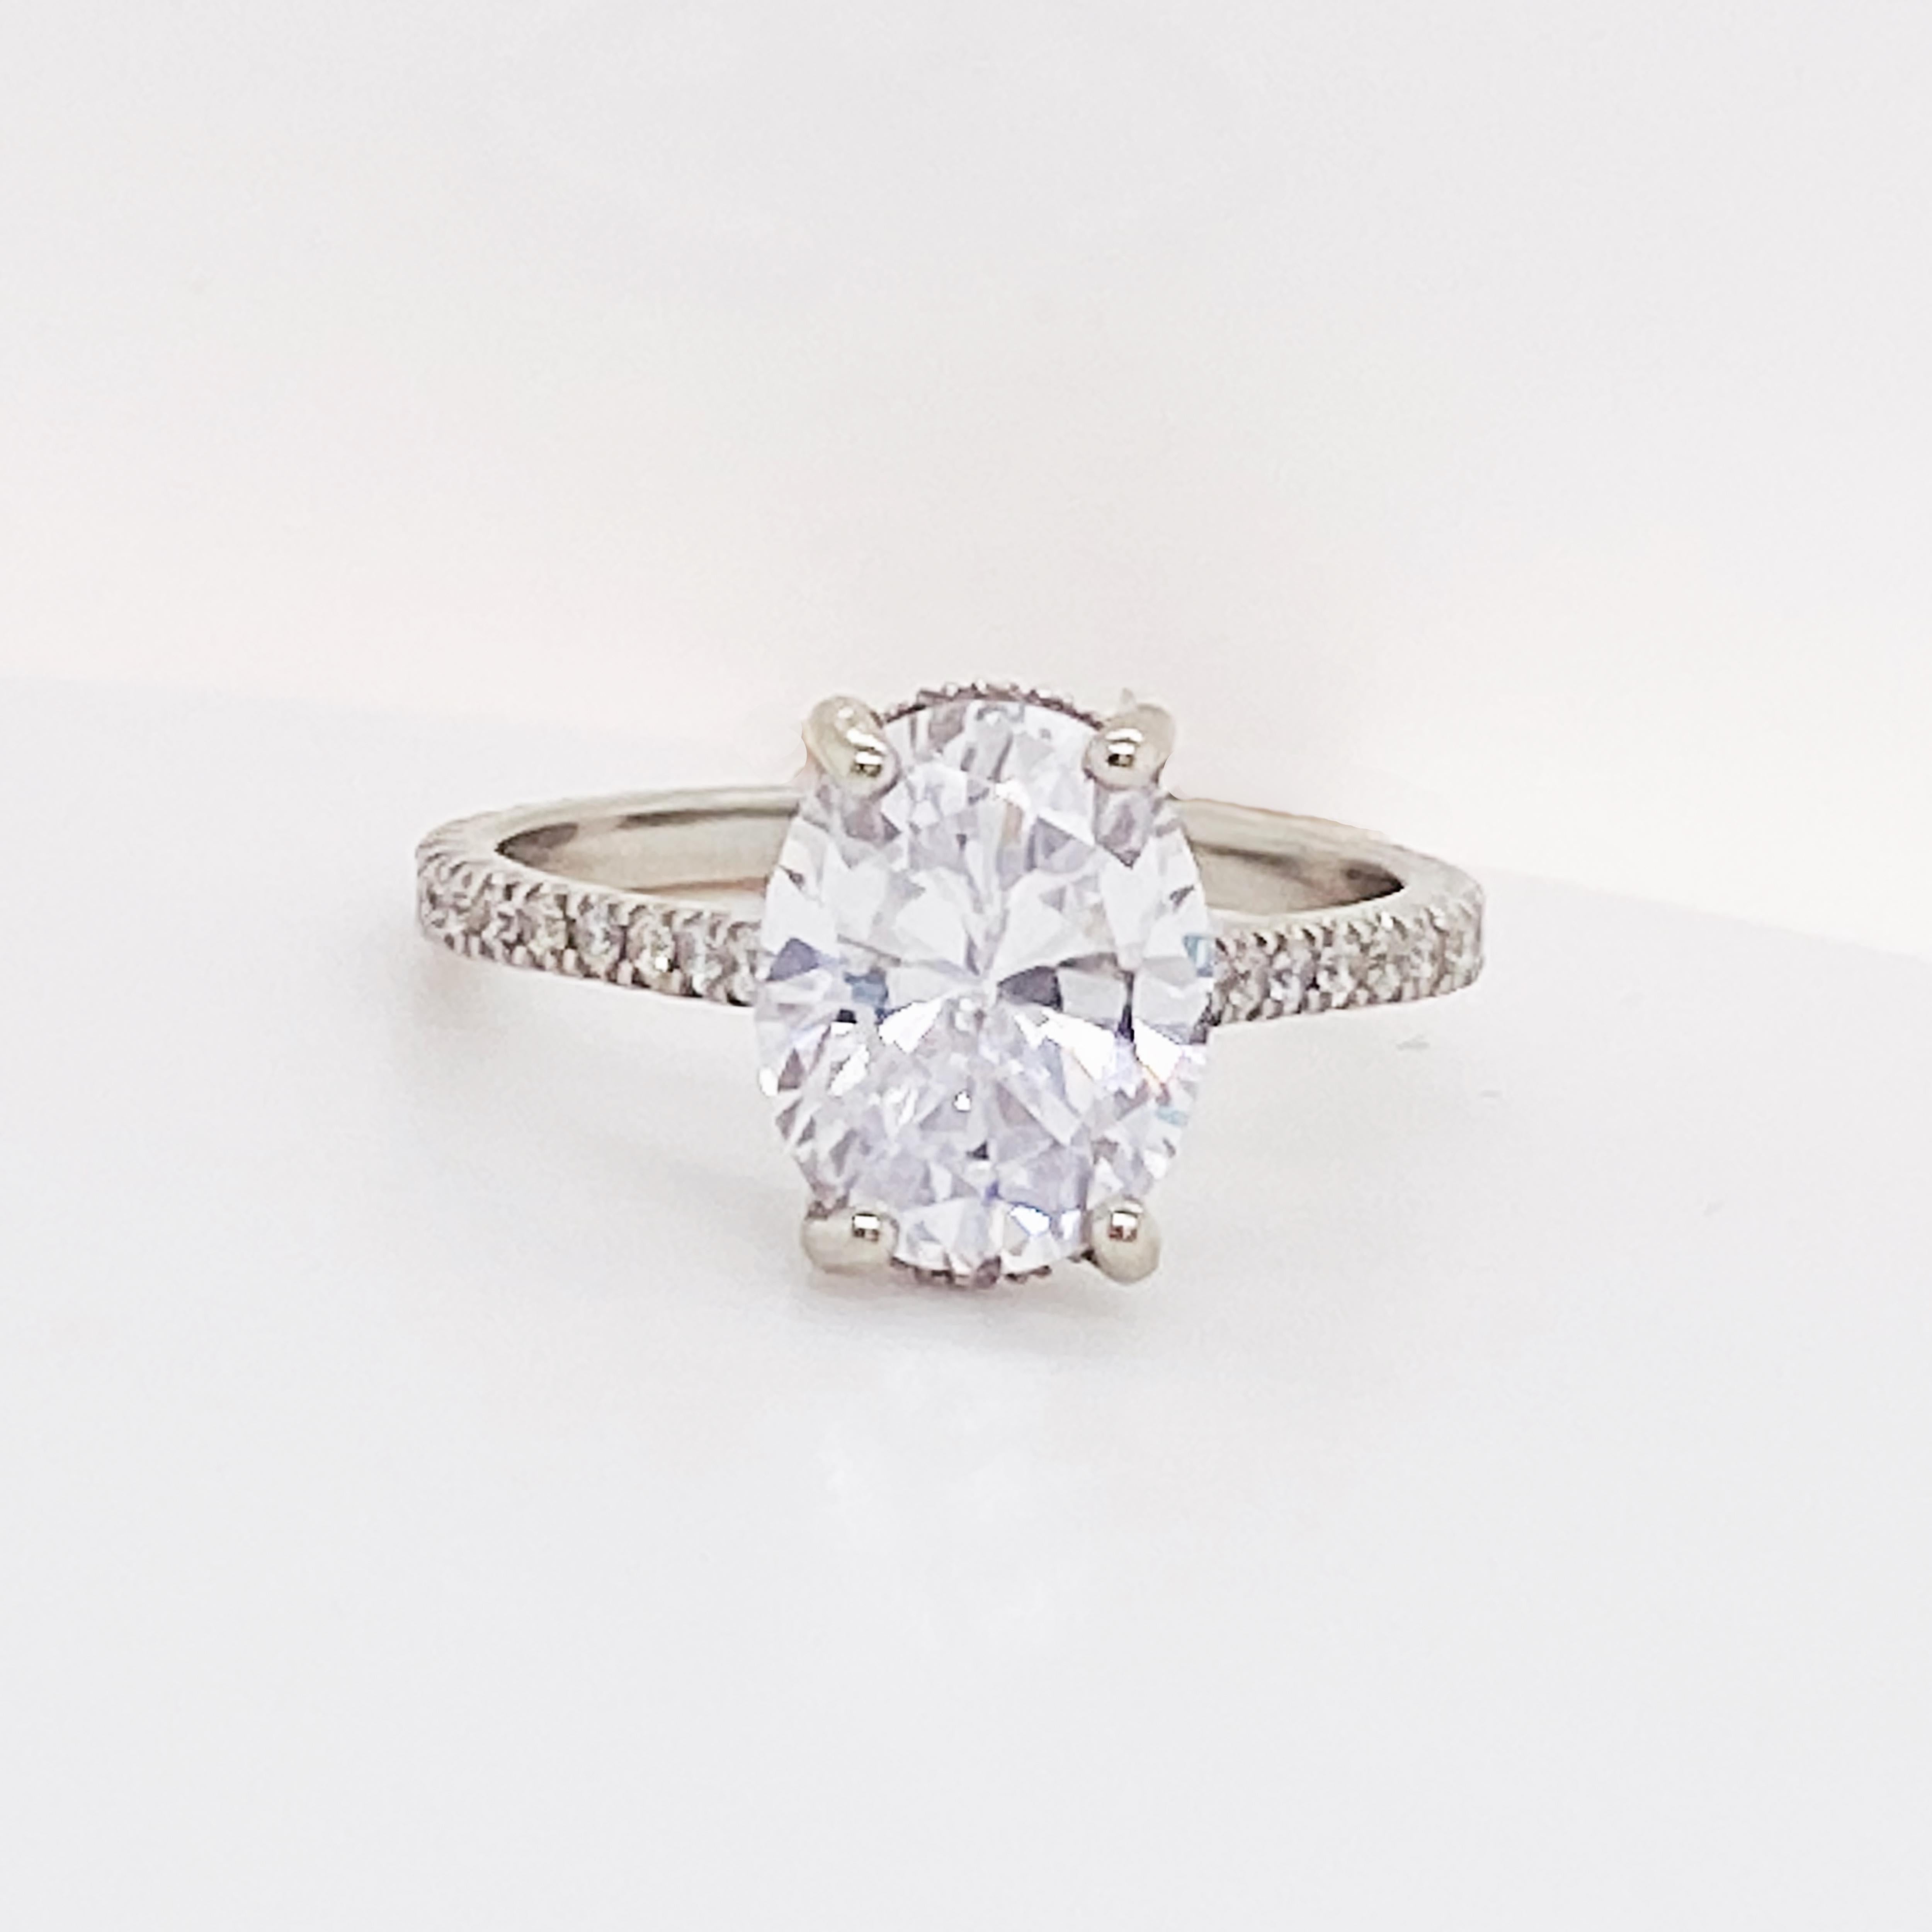 For Sale:  3.50 Carat Oval Diamond Engagement Ring Diamonds on Band 19 Karat Gold 7